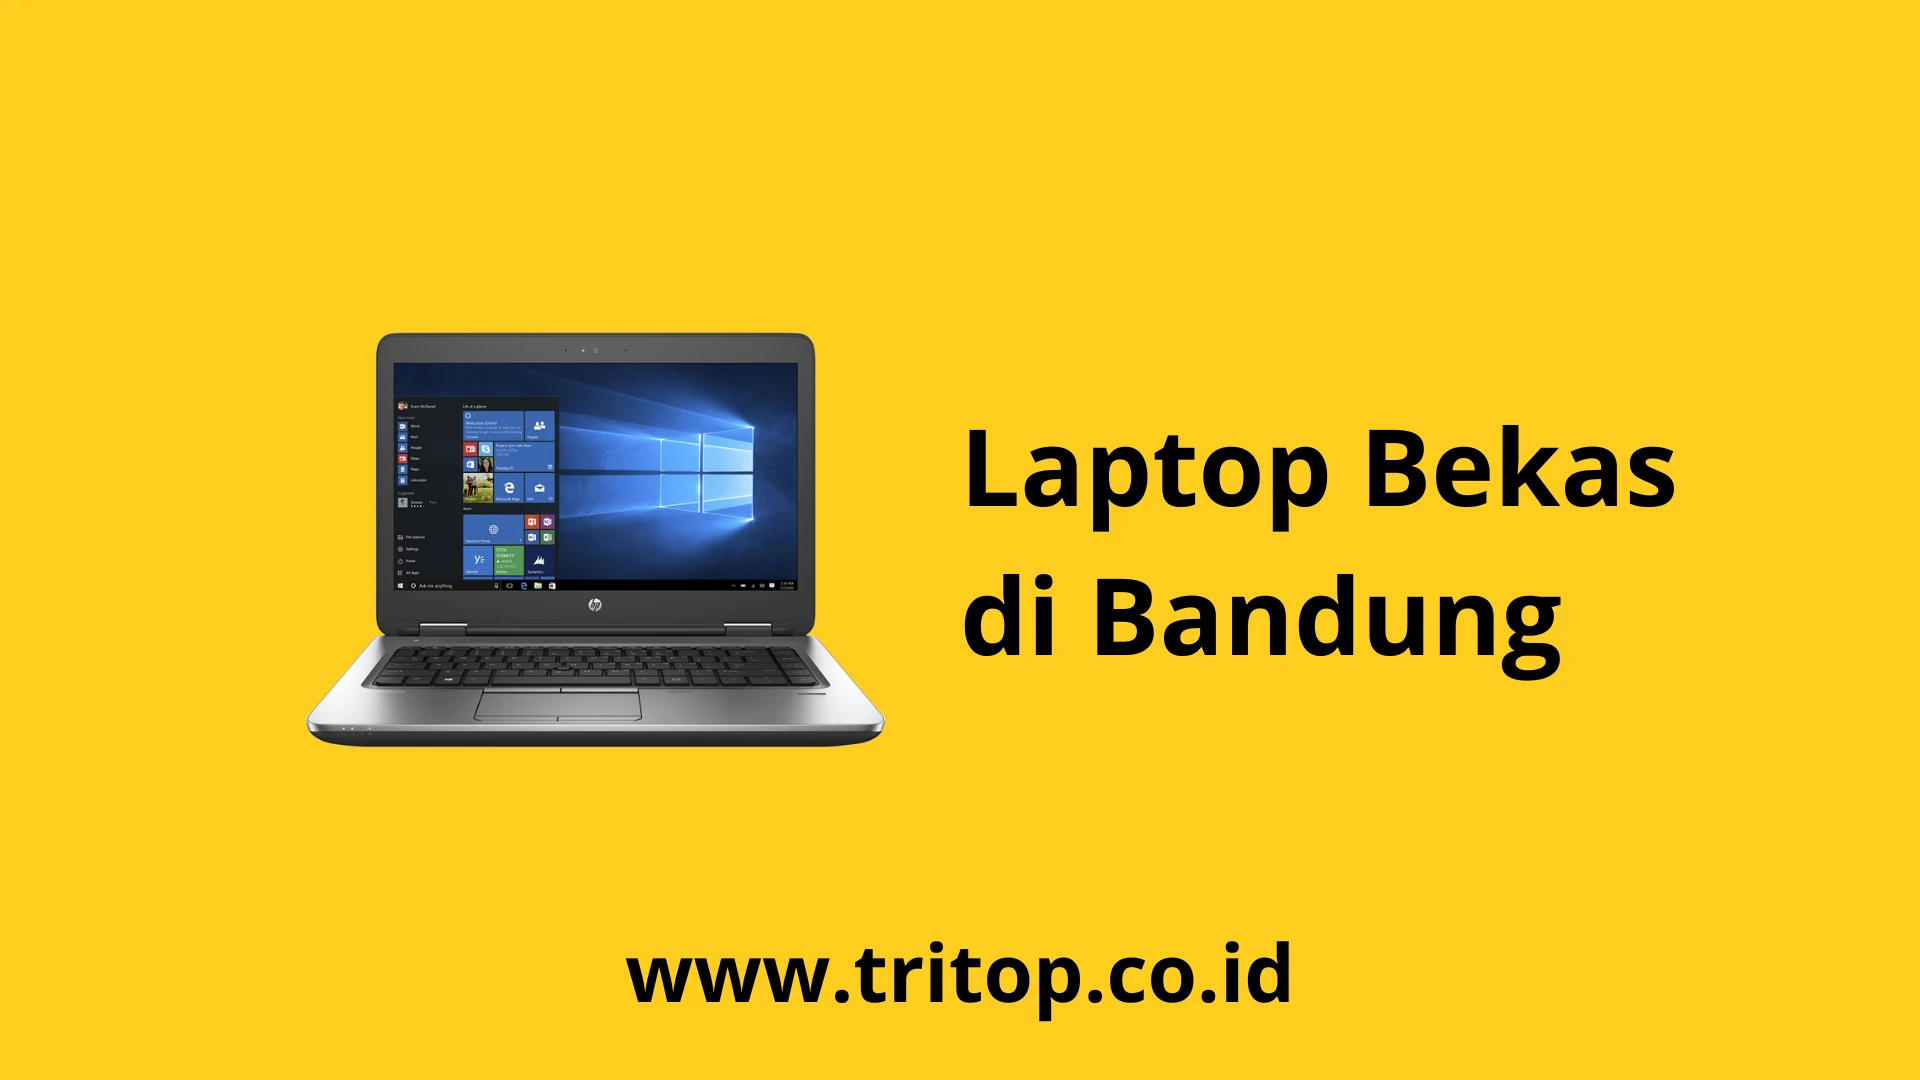 Laptop Bekas Bandung Tritop.co.id